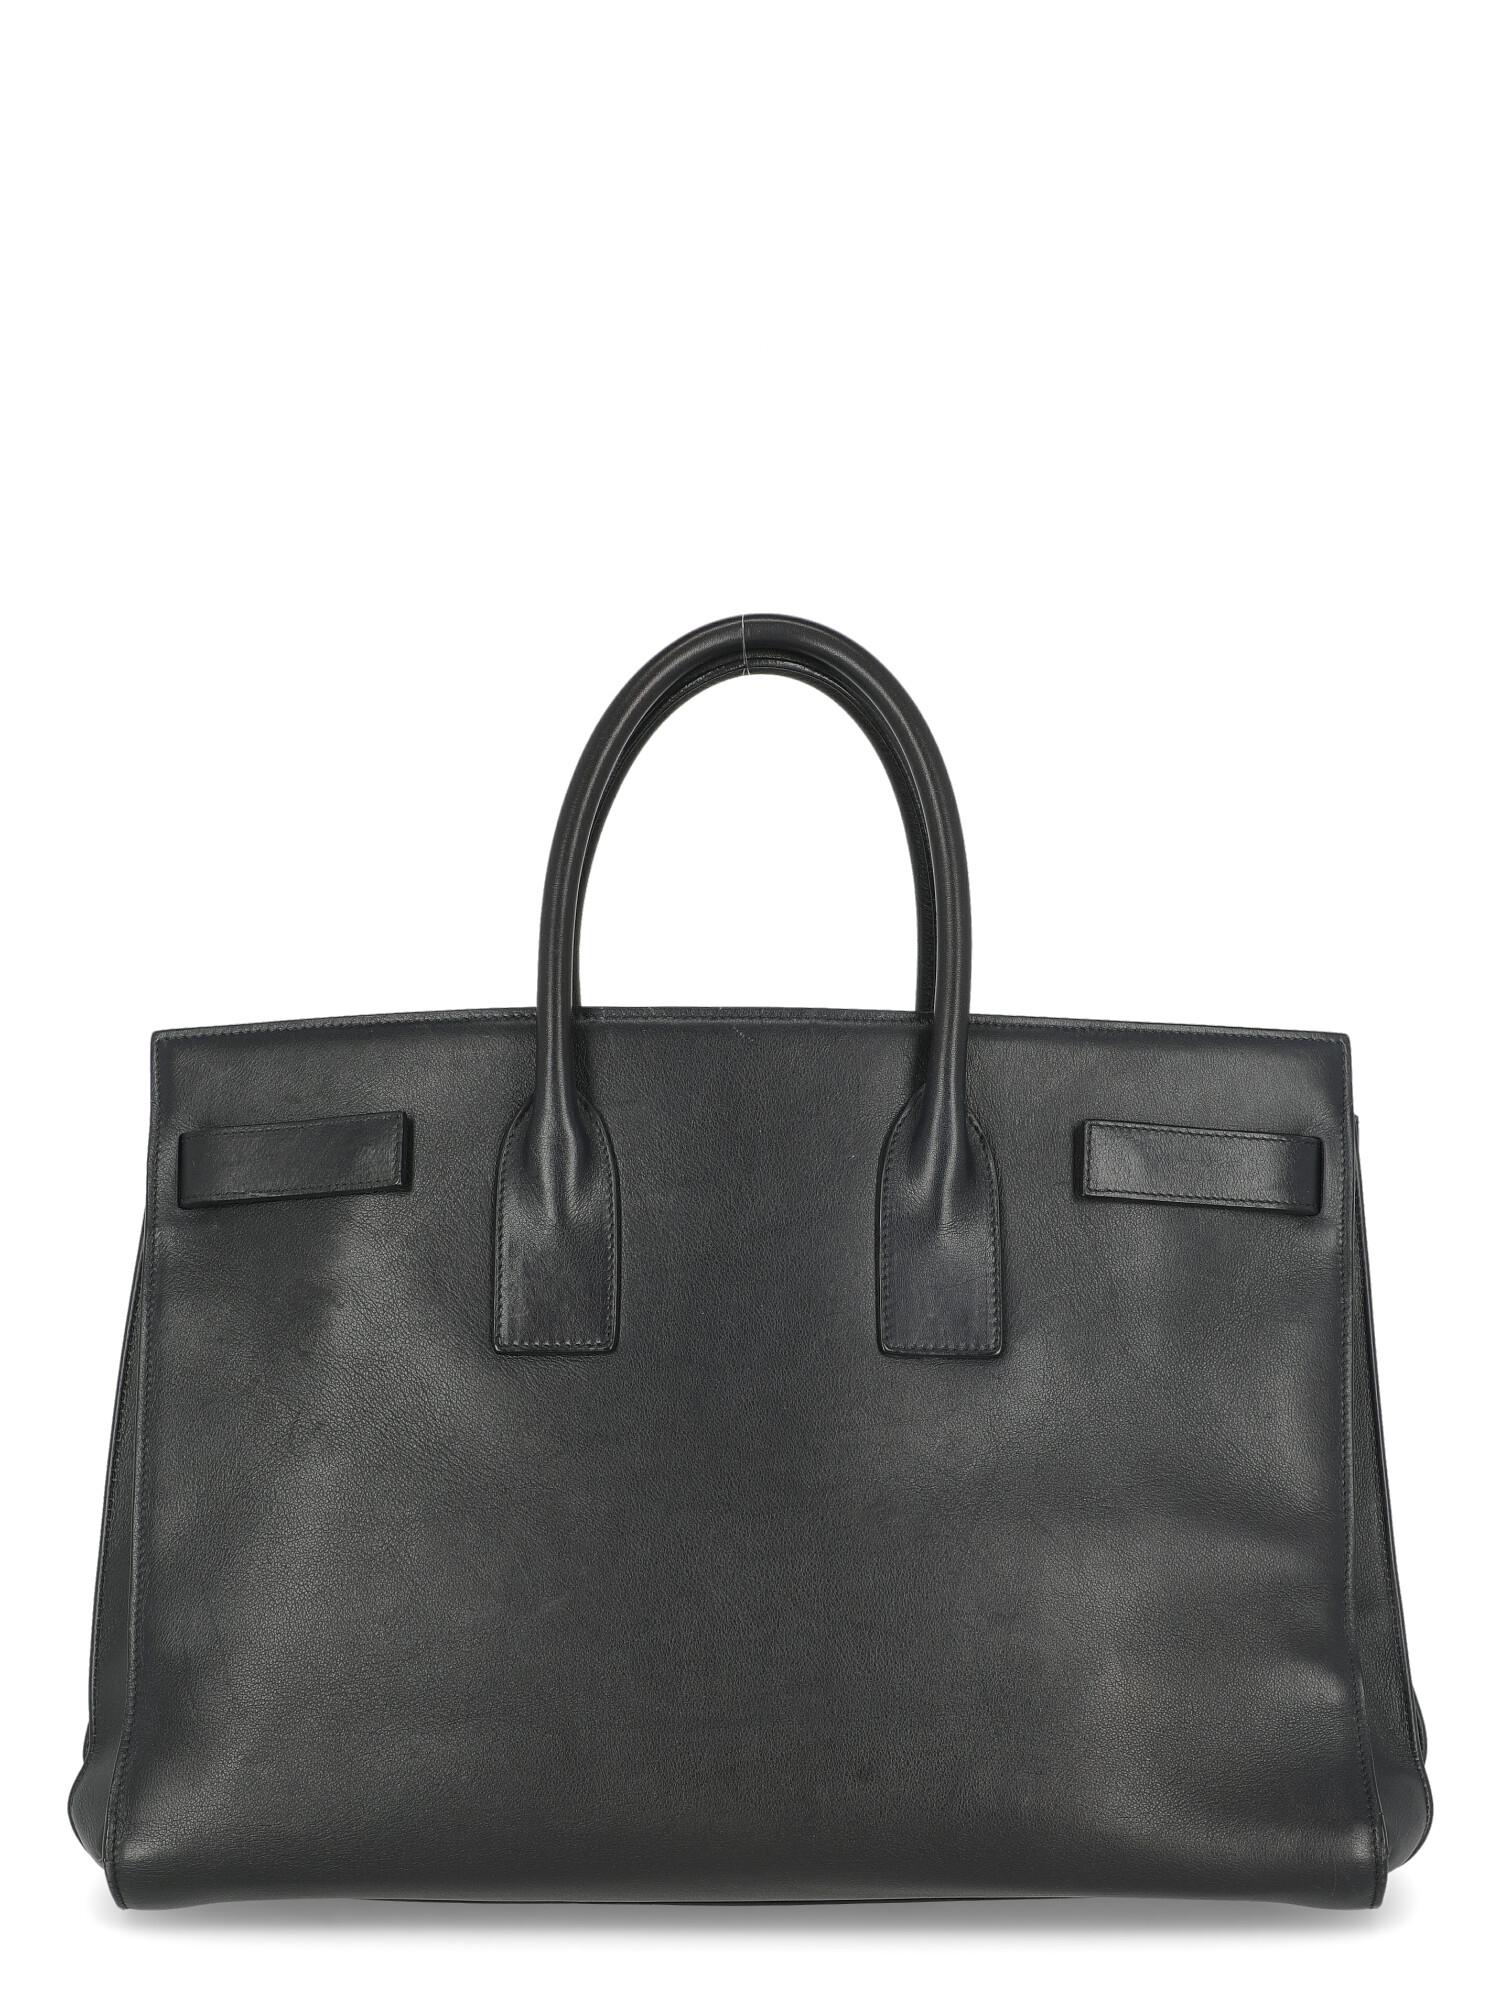 Saint Laurent Woman Handbag Sac De Jour Navy Leather In Fair Condition For Sale In Milan, IT